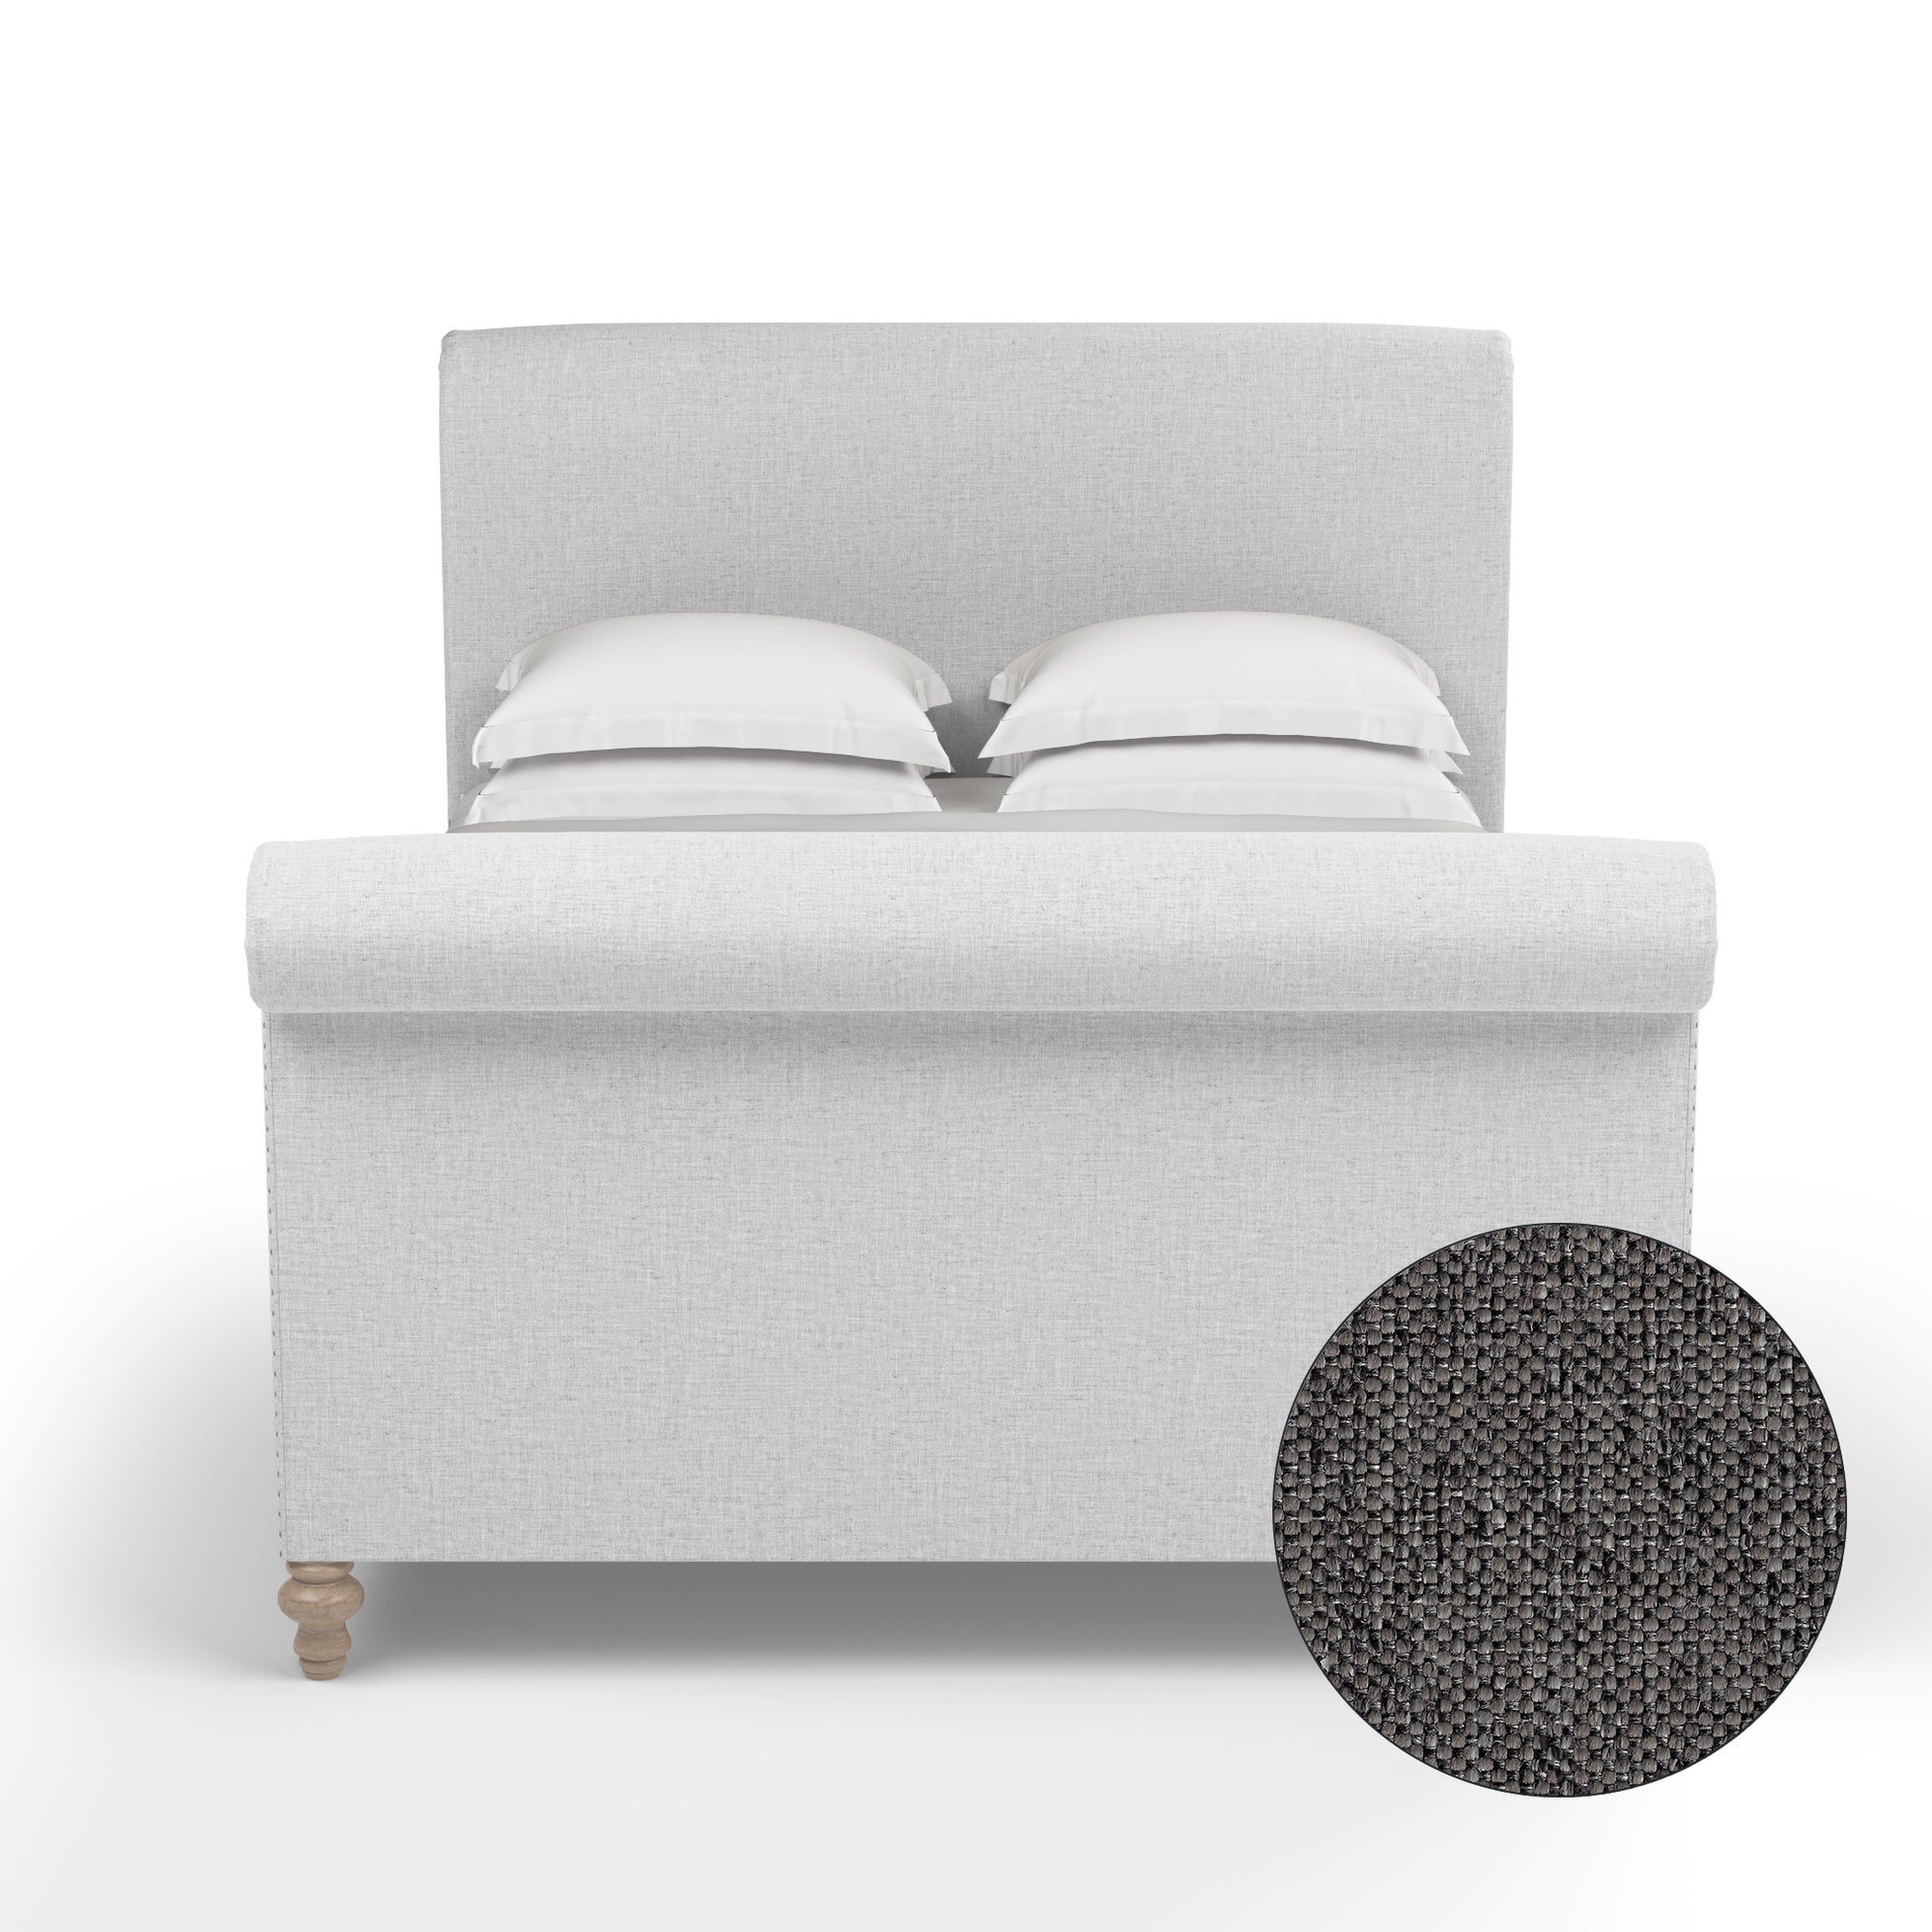 Empire Scroll Bed w/ Footboard - Graphite Pebble Weave Linen